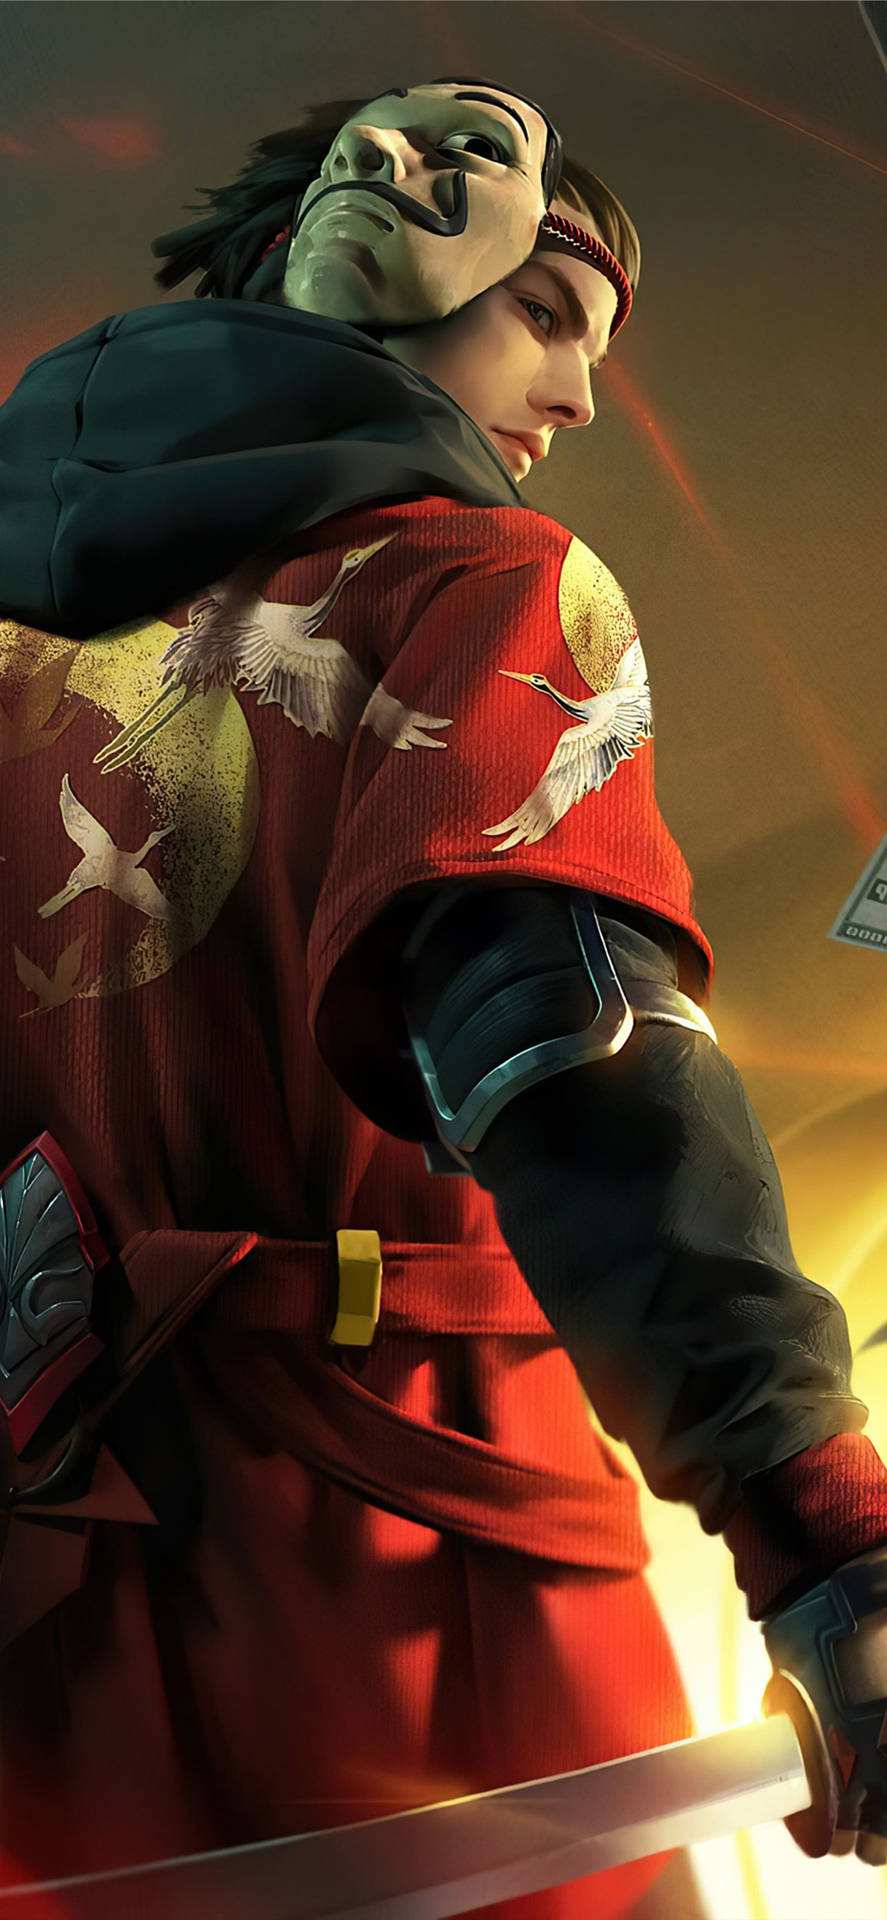 Free Fire Season 1 With Money Heist Mask Background